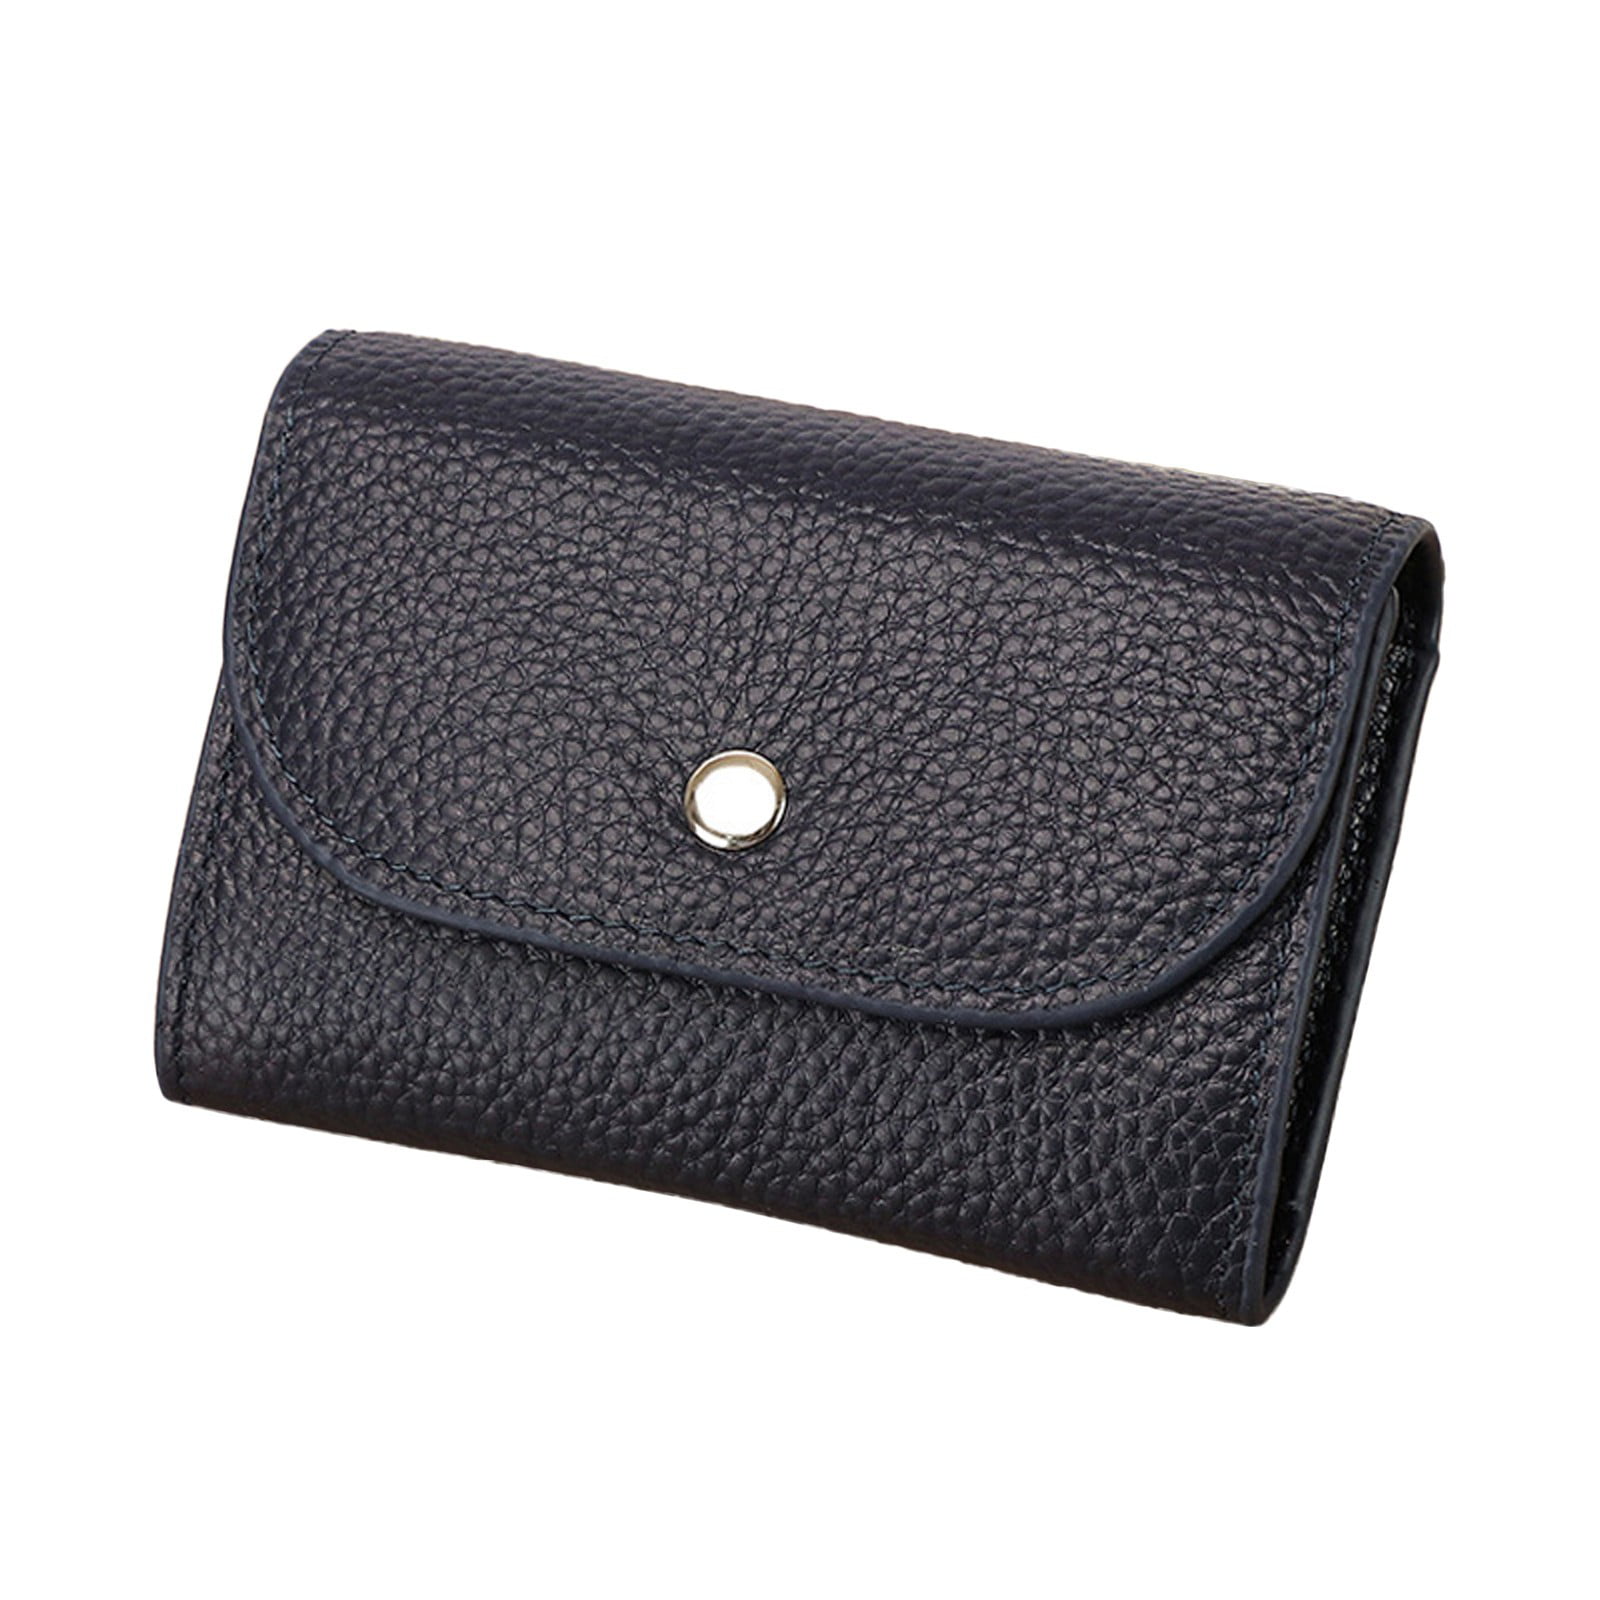 duhgbne fashion id long wallet solid color zipper women hasp purse multiple  card slots clutch bag phone bag 